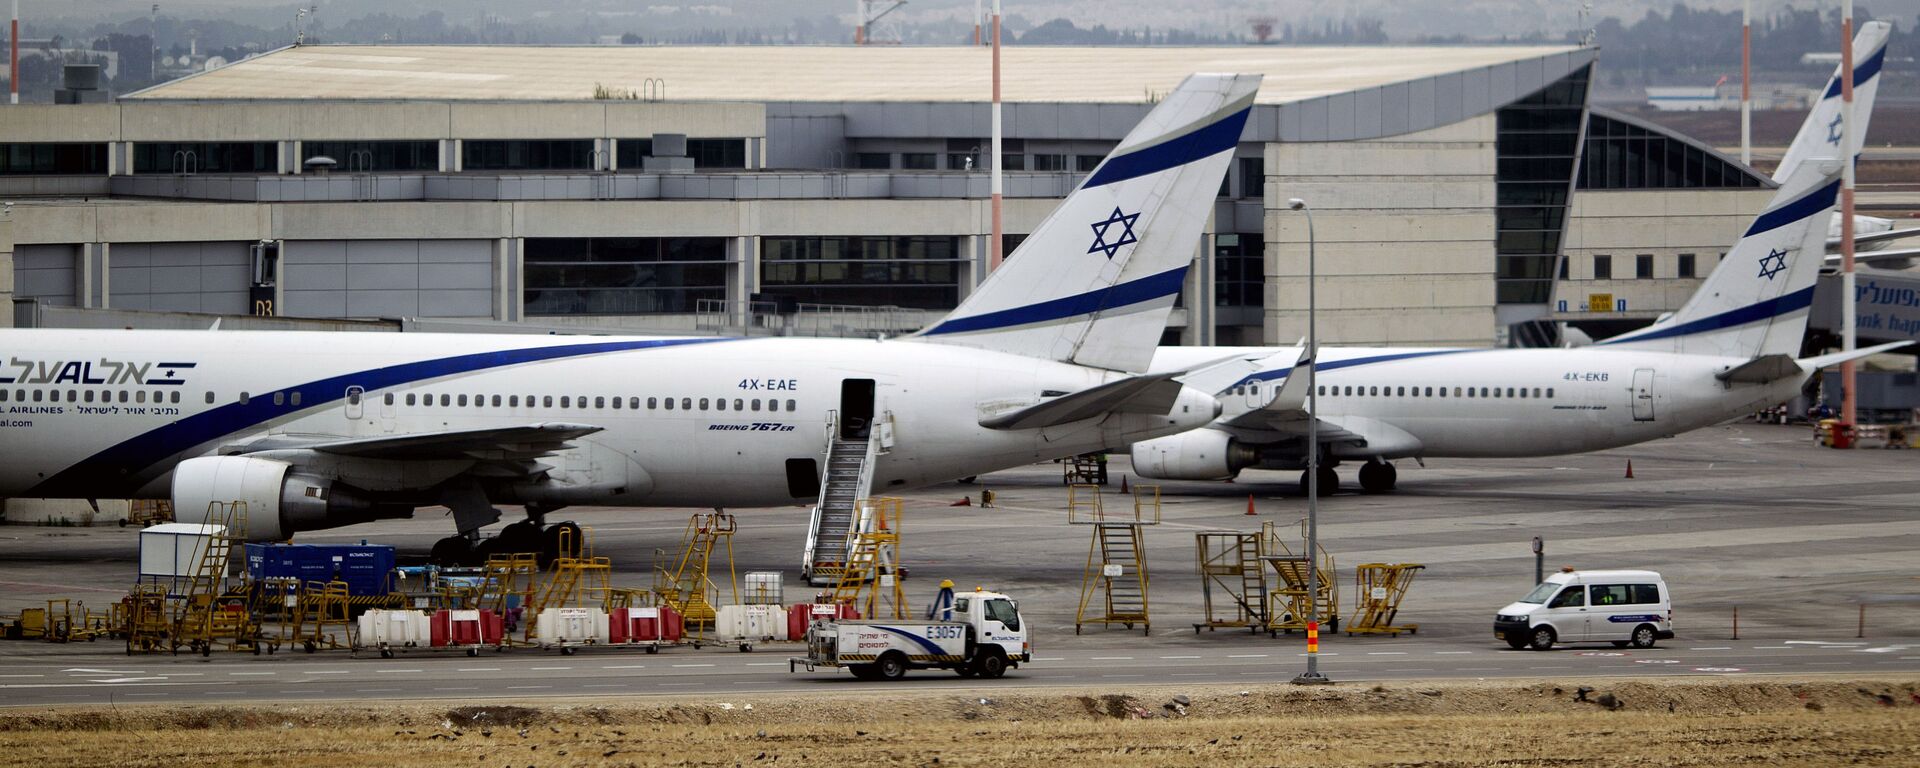 مطار بن غوريون الدولي في تل أبيب، إسرائيل 21 أبريل/ نيسان 2013 - سبوتنيك عربي, 1920, 20.12.2021